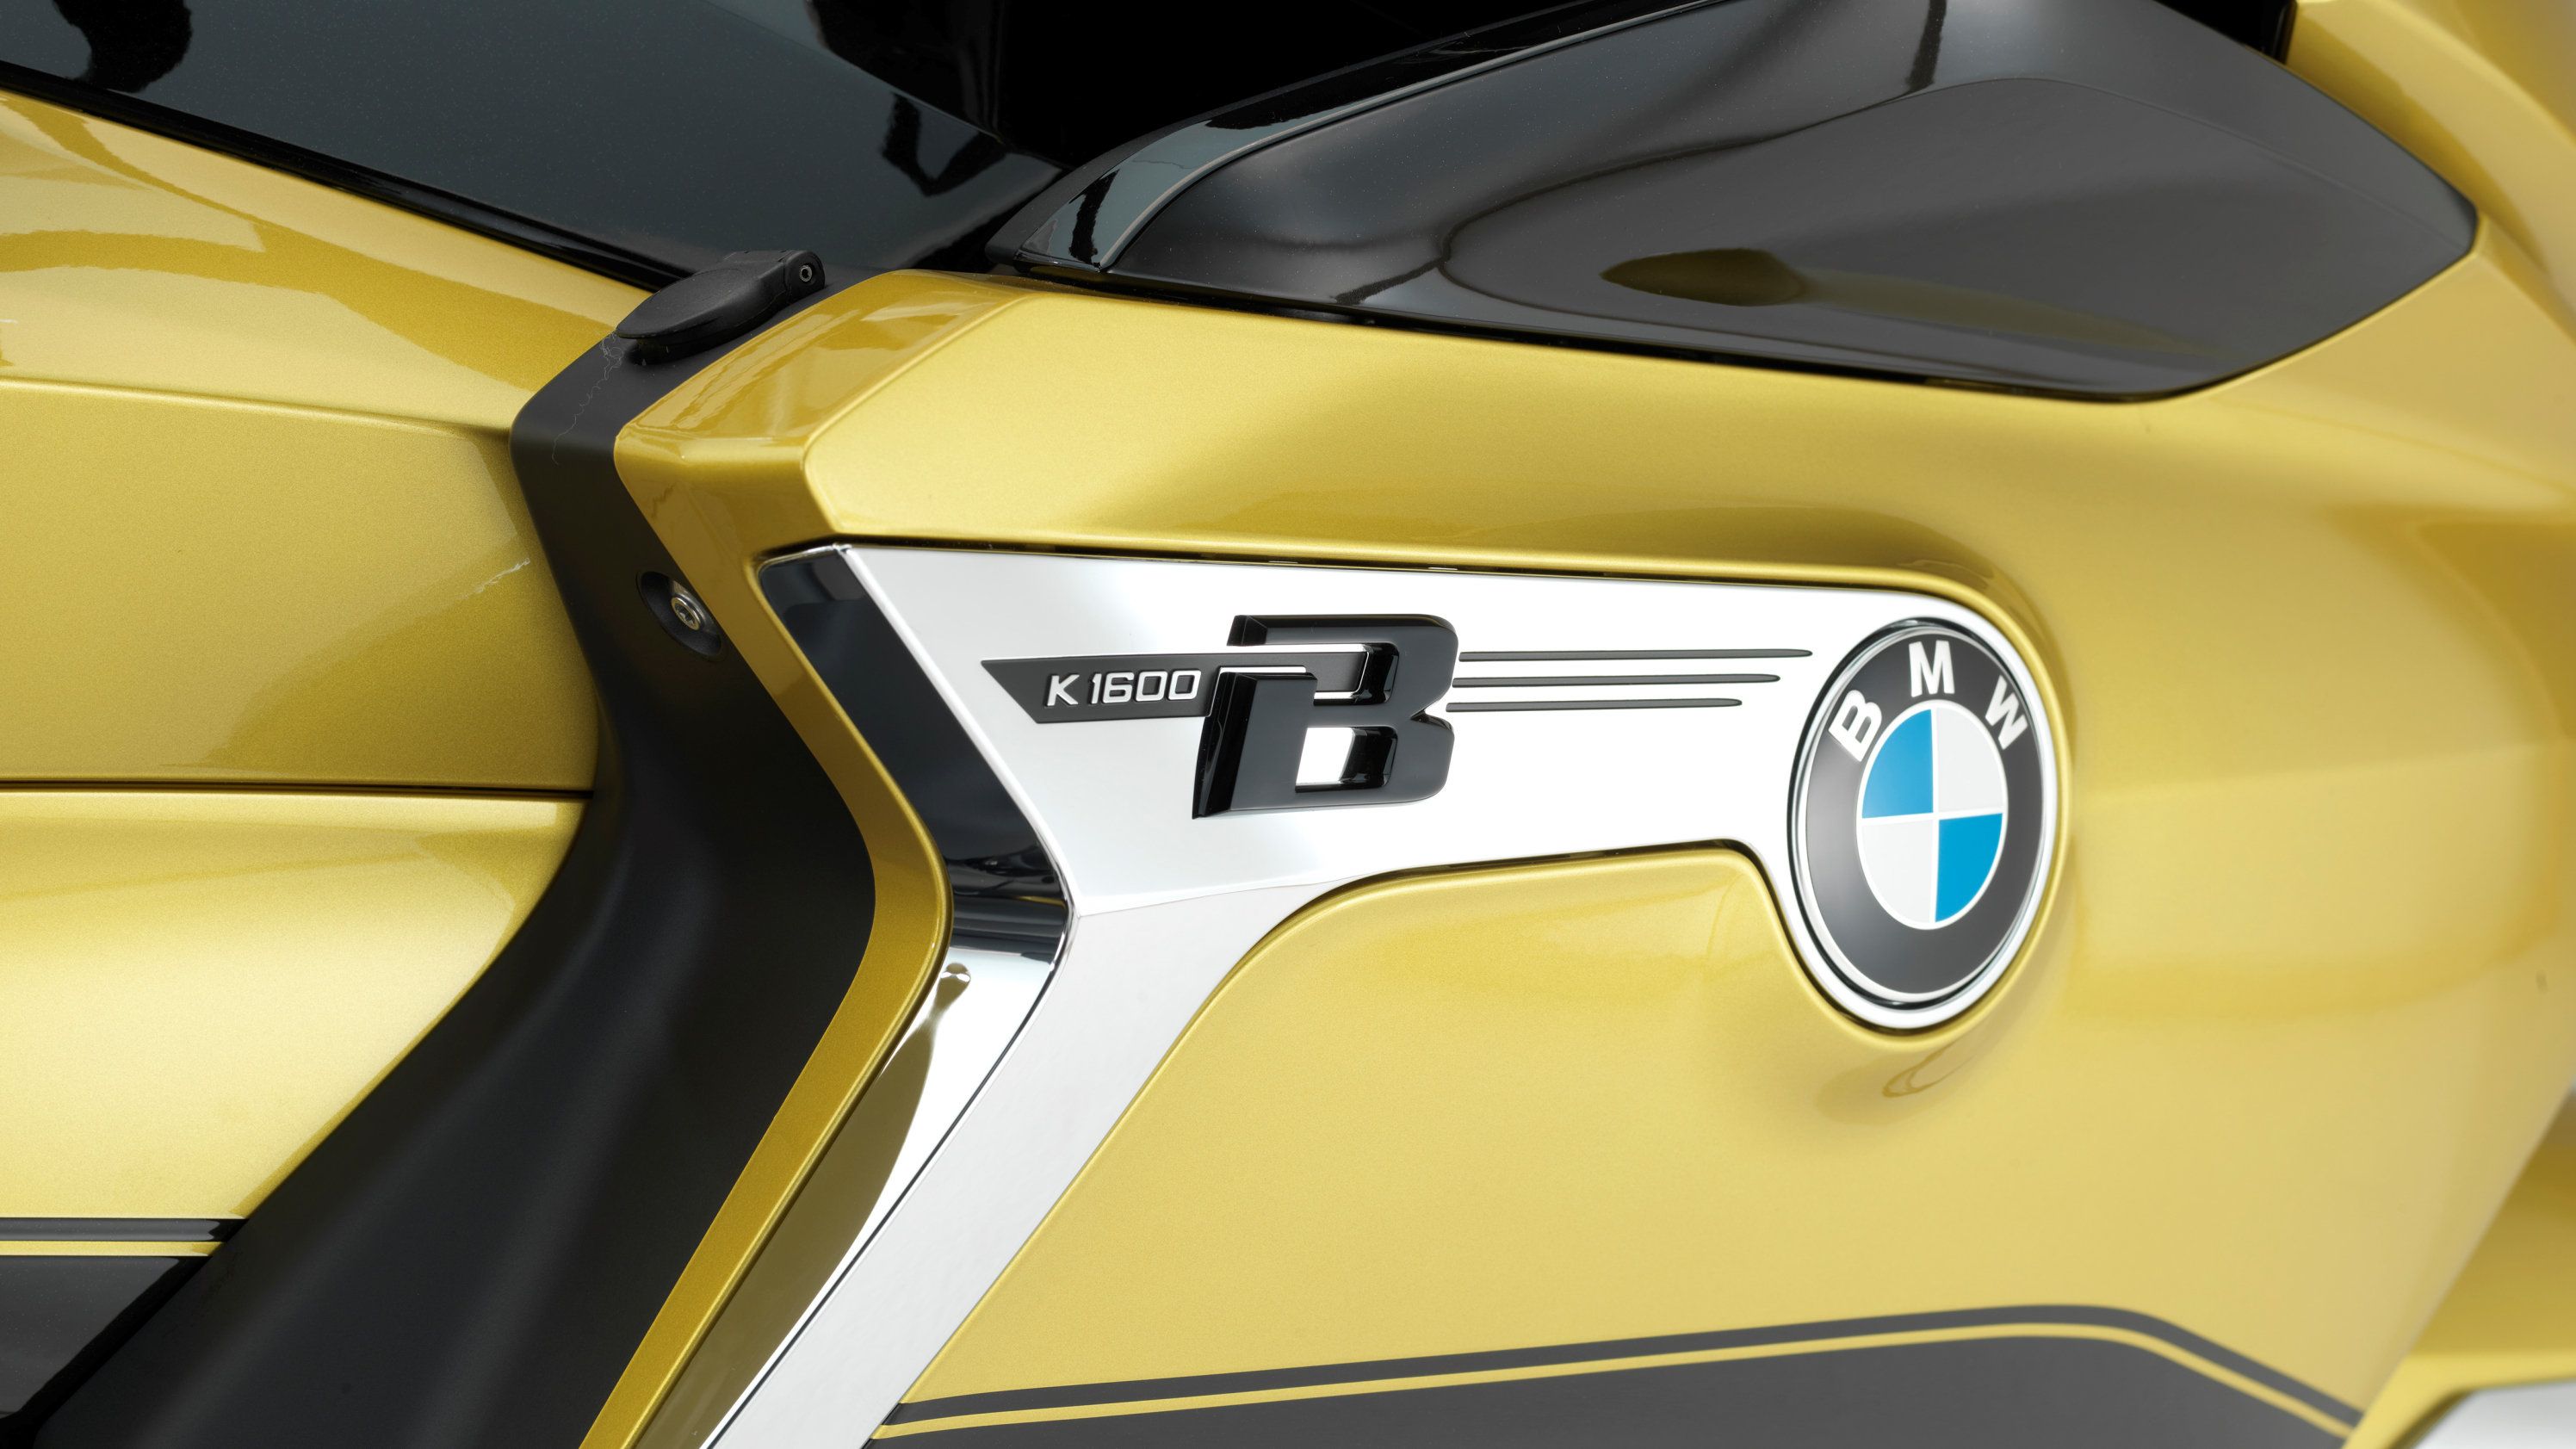 2018 - 2019 BMW K 1600 Grand America